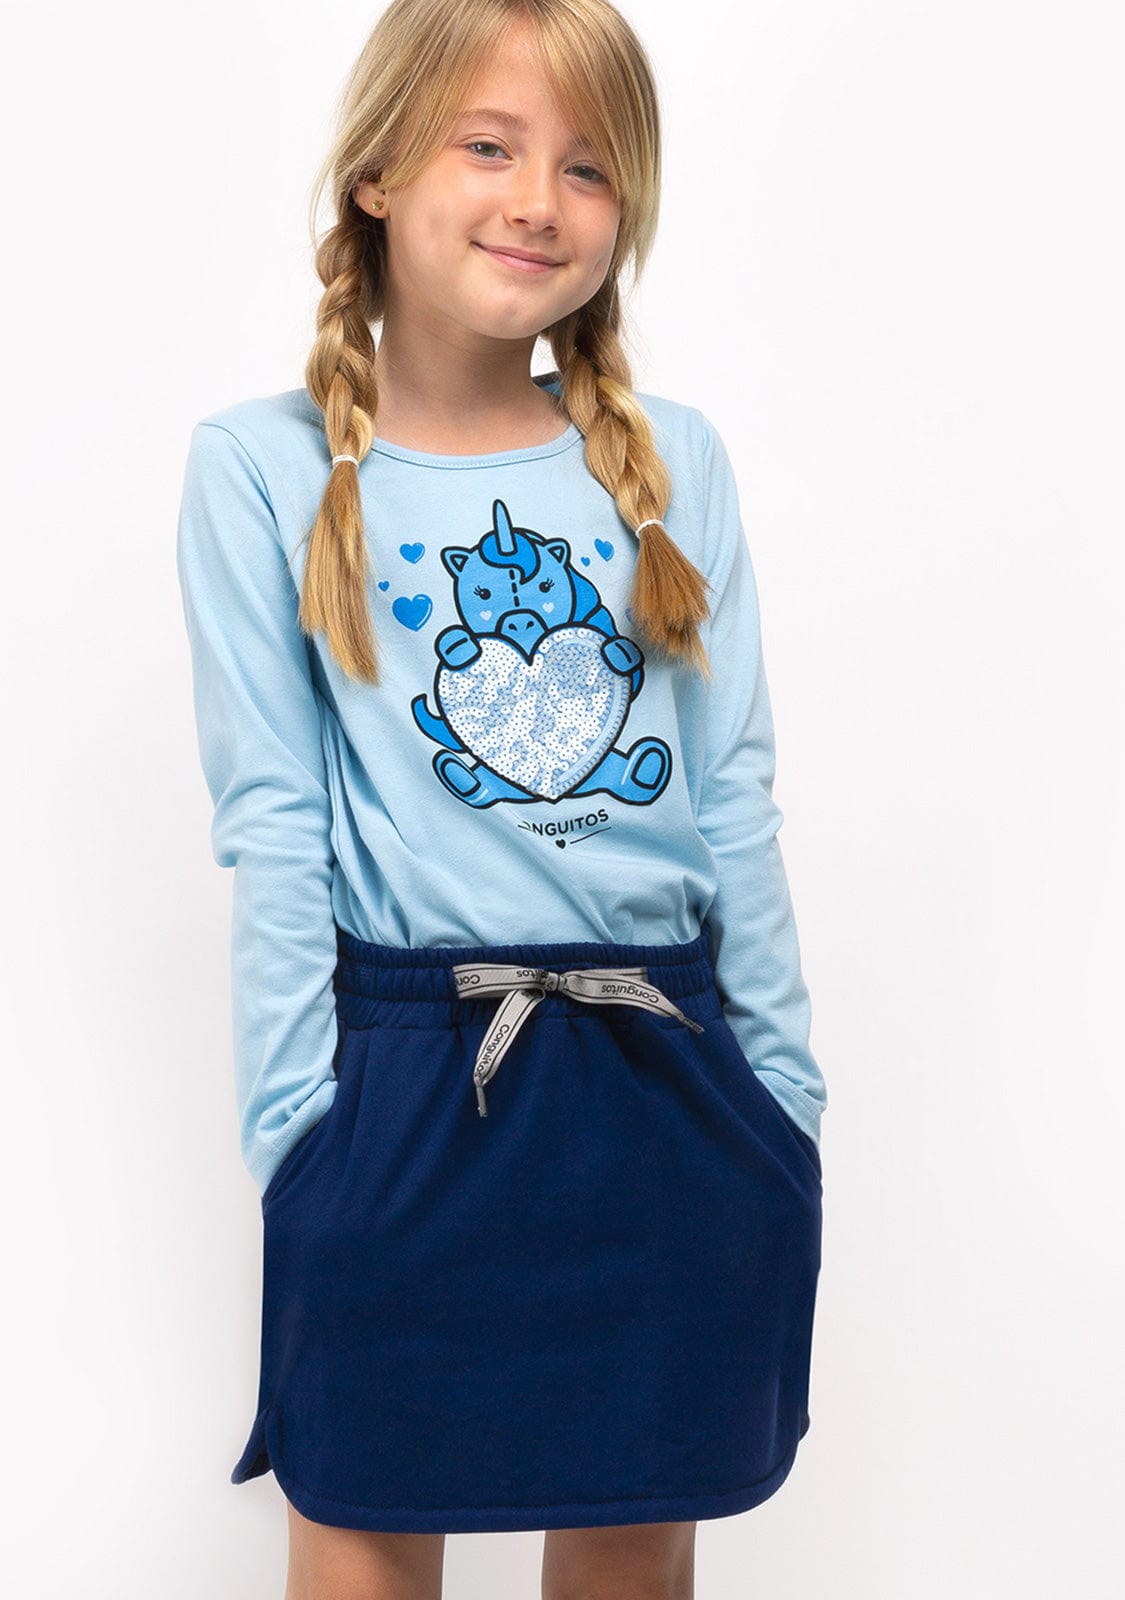 CONGUITOS TEXTIL Clothing Girl's Bluish Unicorn Shirt